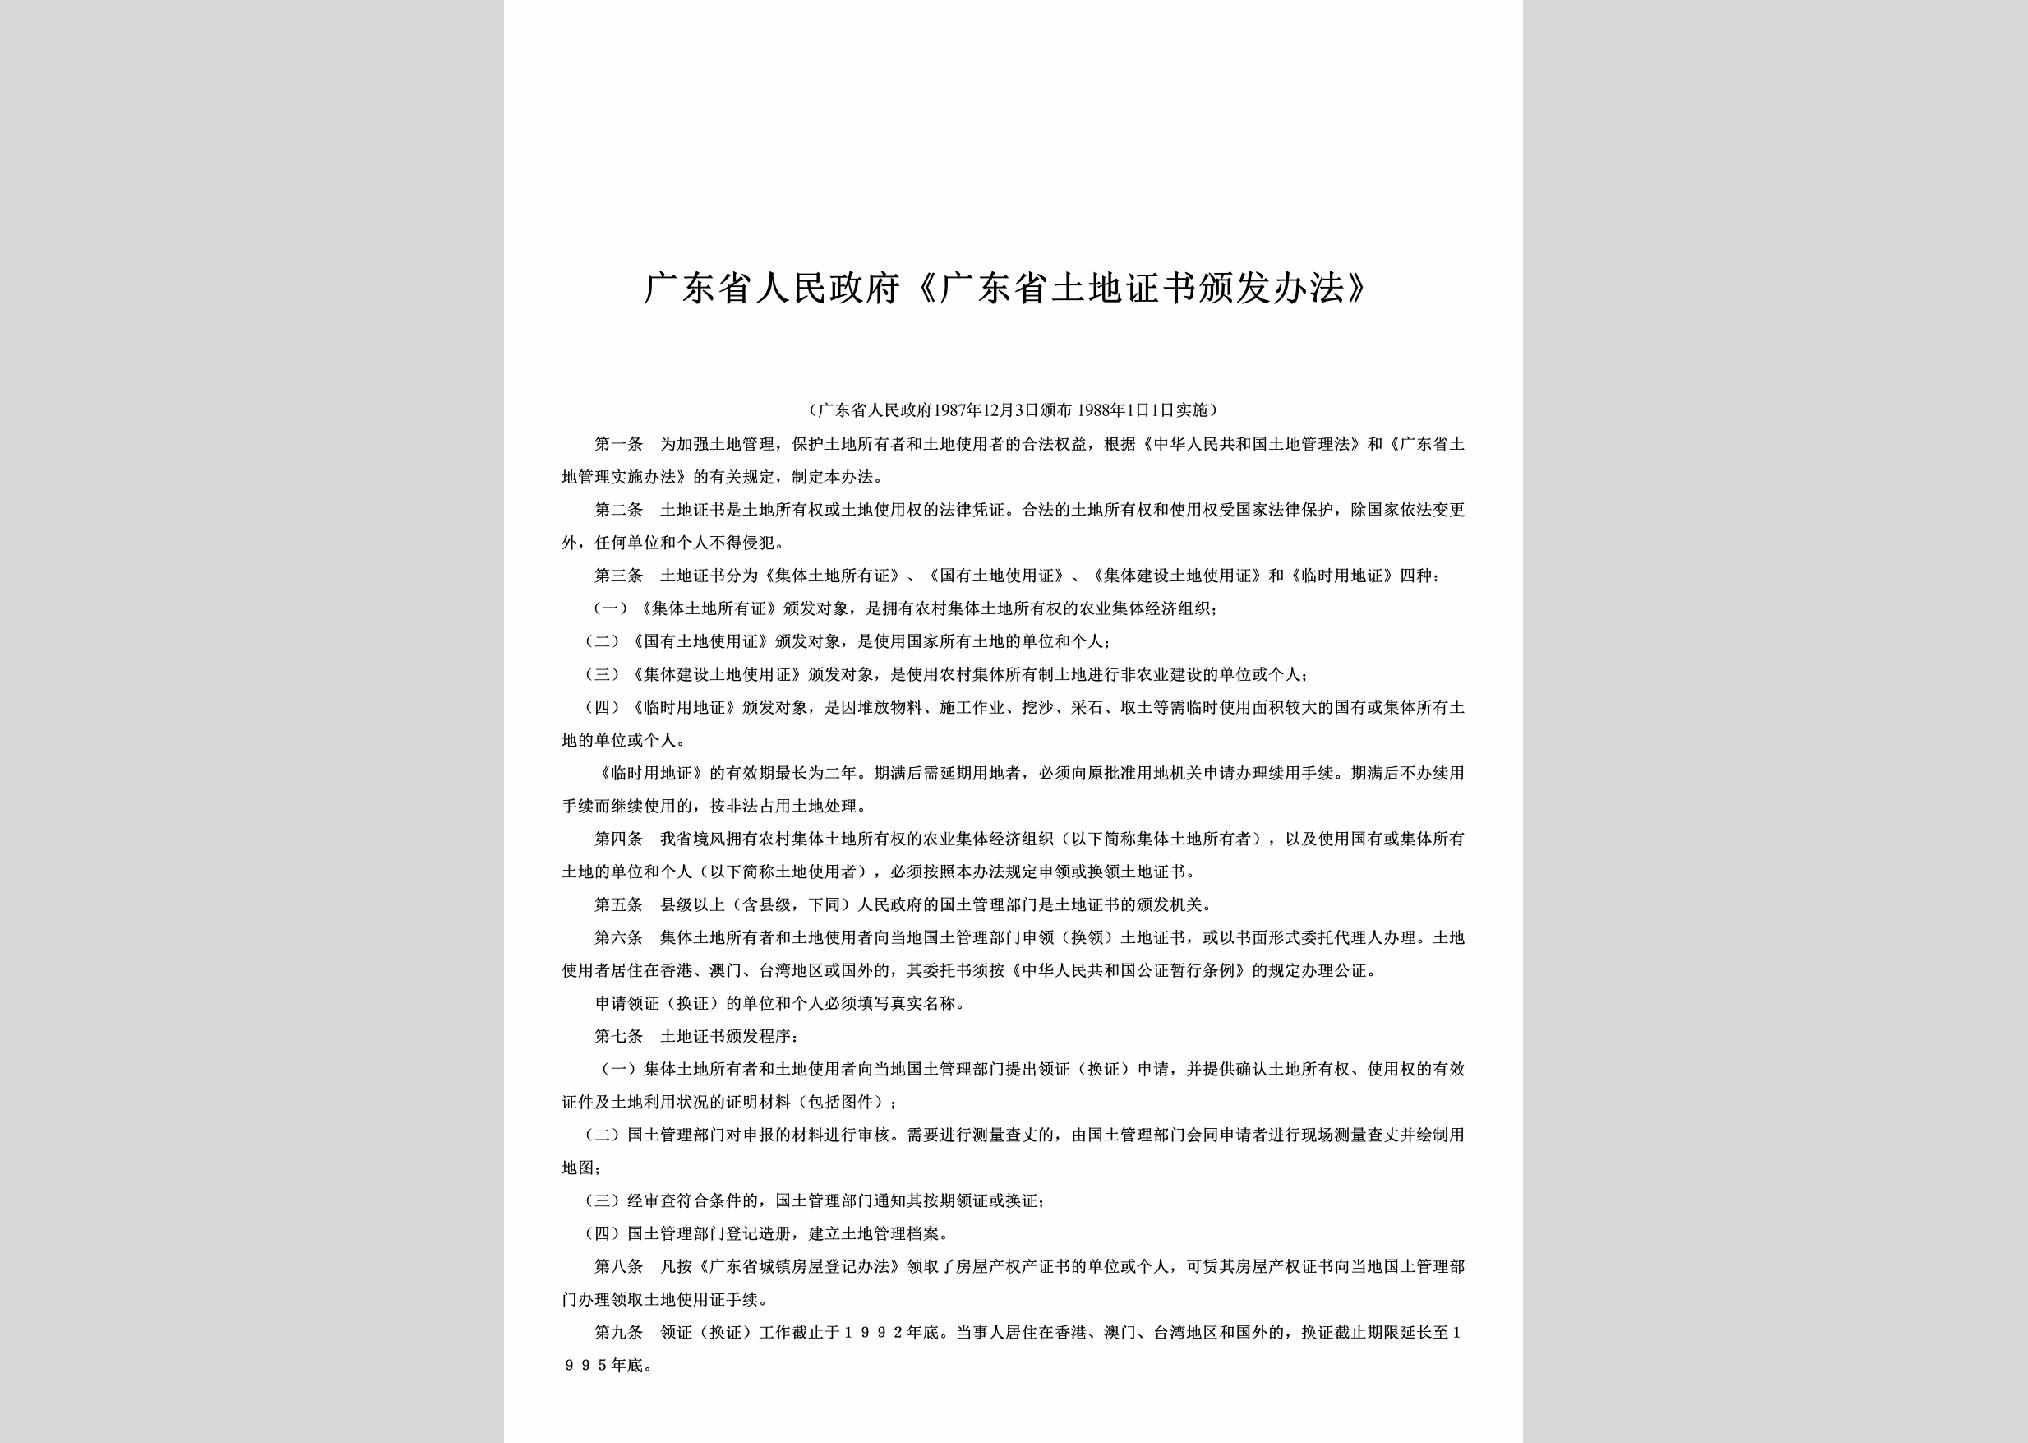 GD-TDZSBFBF-1988：《广东省土地证书颁发办法》